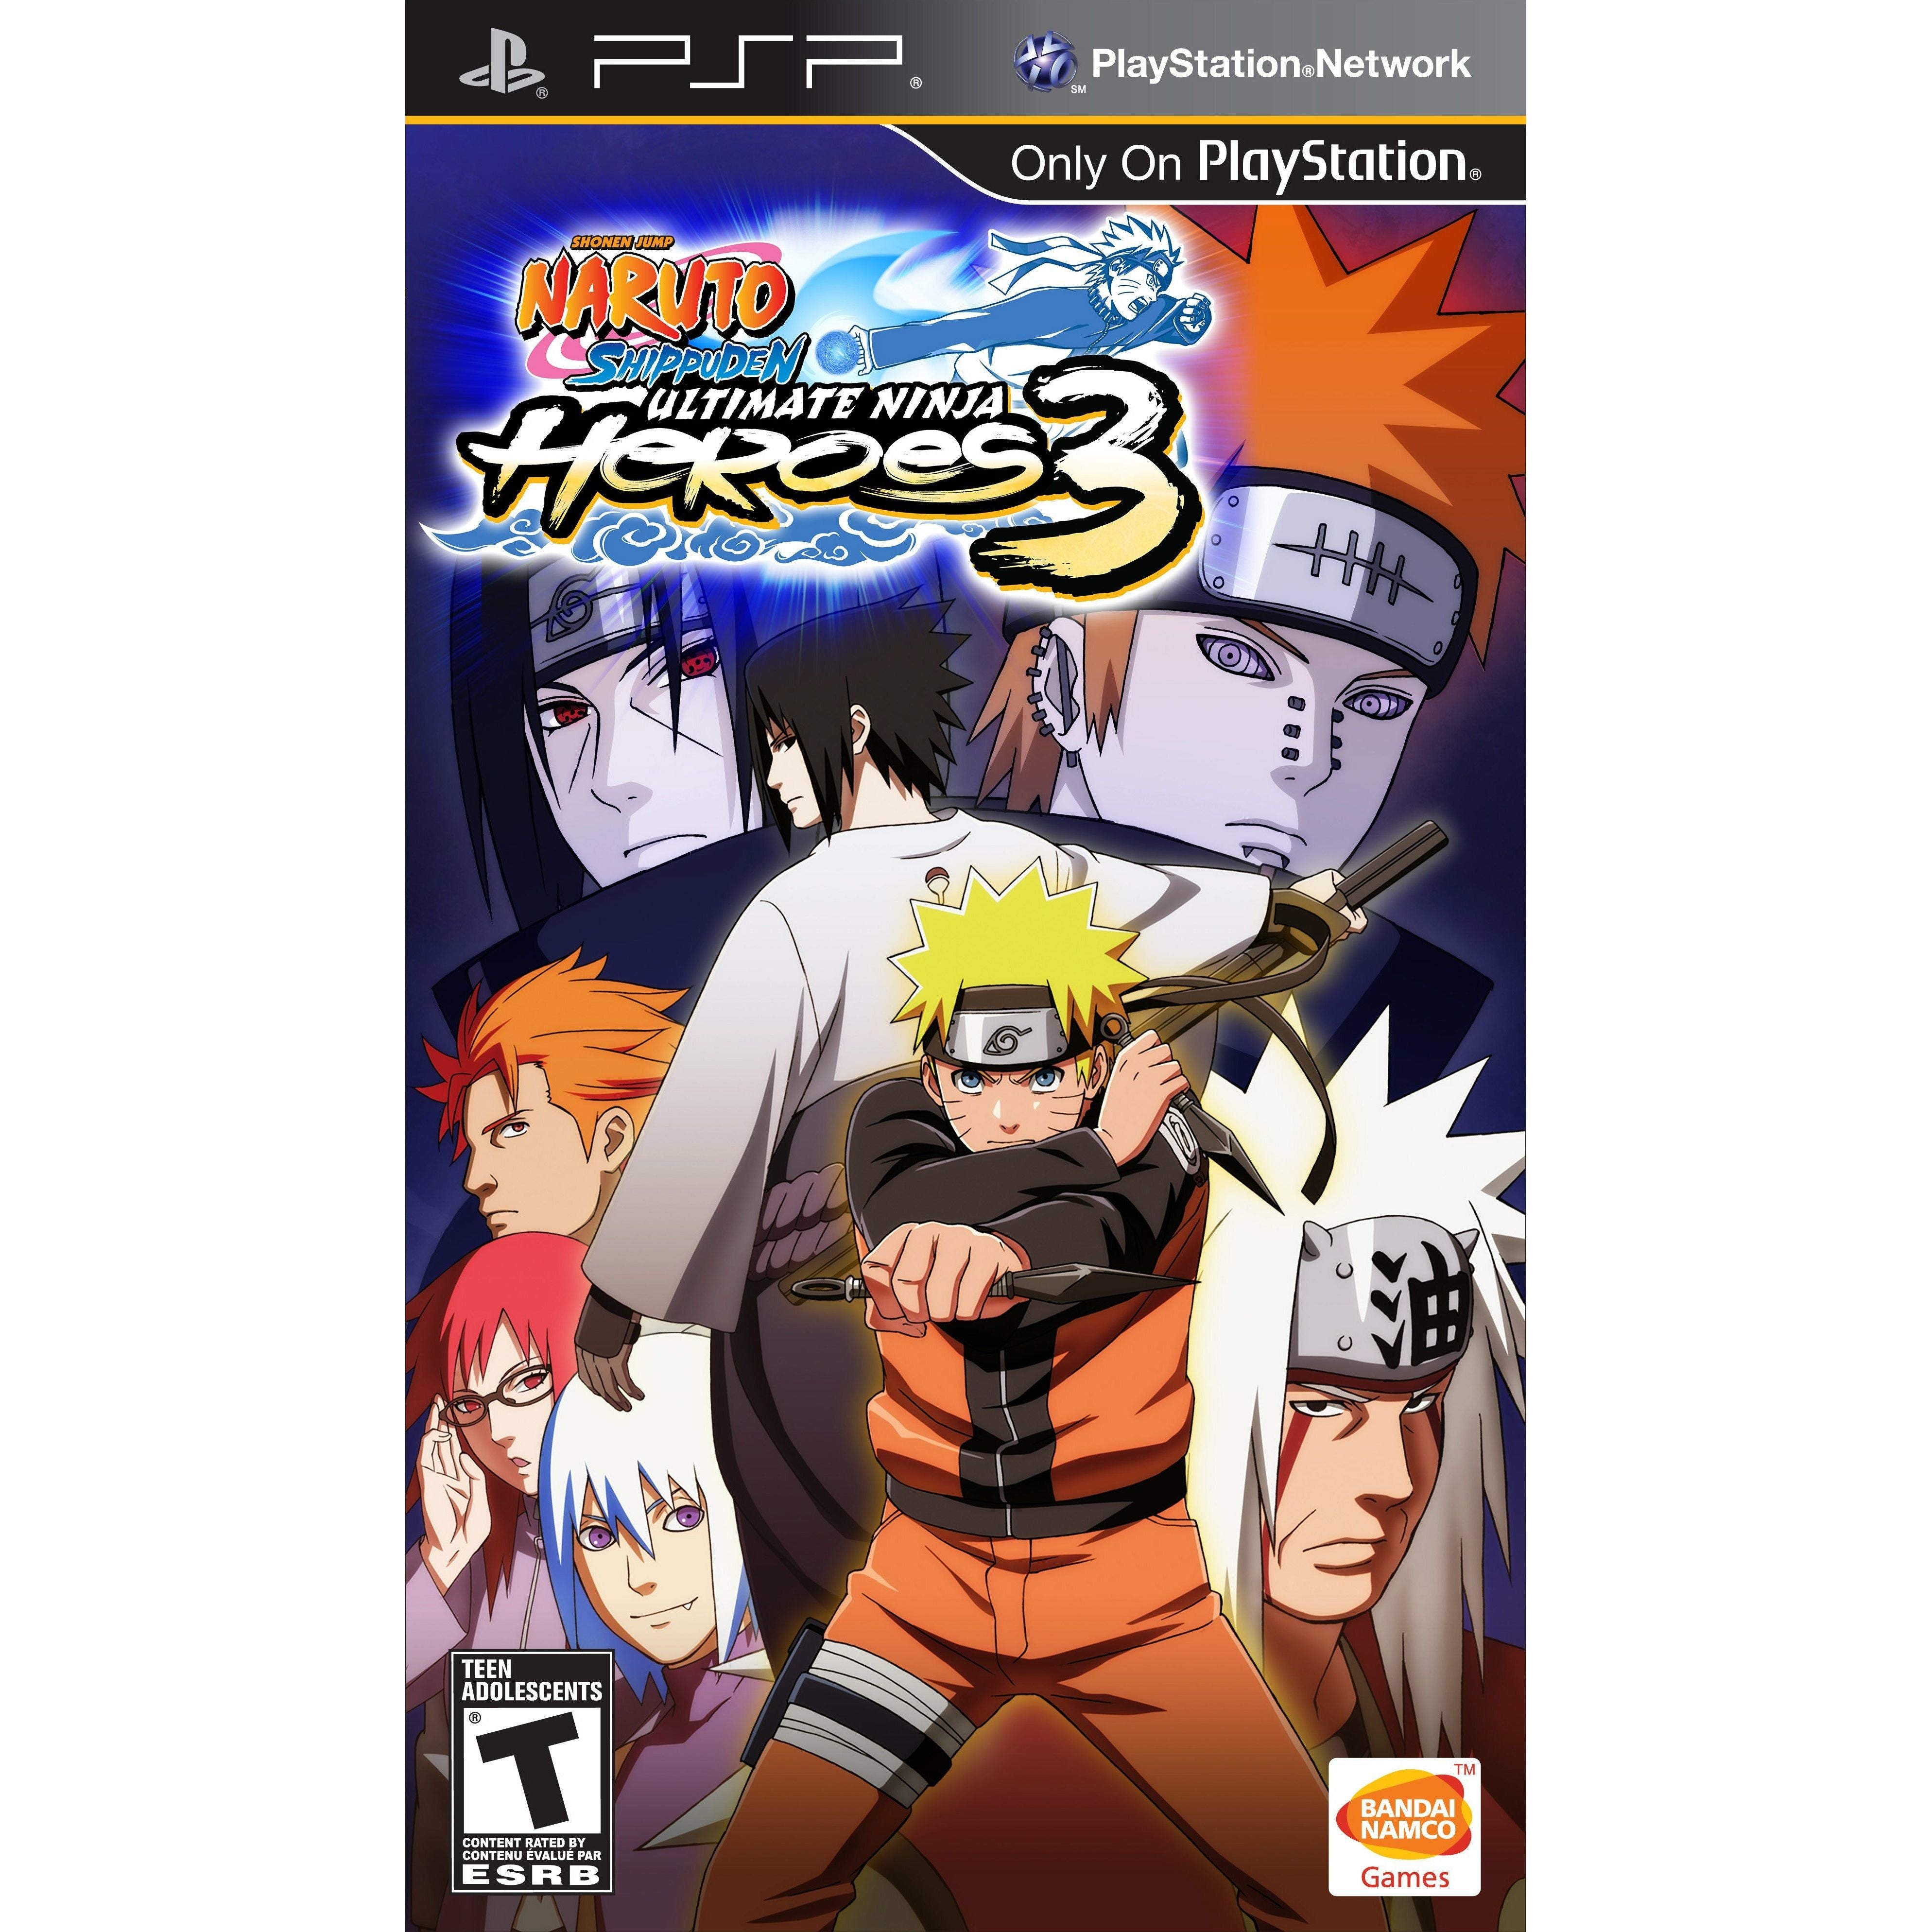 PSP - Naruto Shippuden Ultimate Ninja Heroes 3 (En étui)